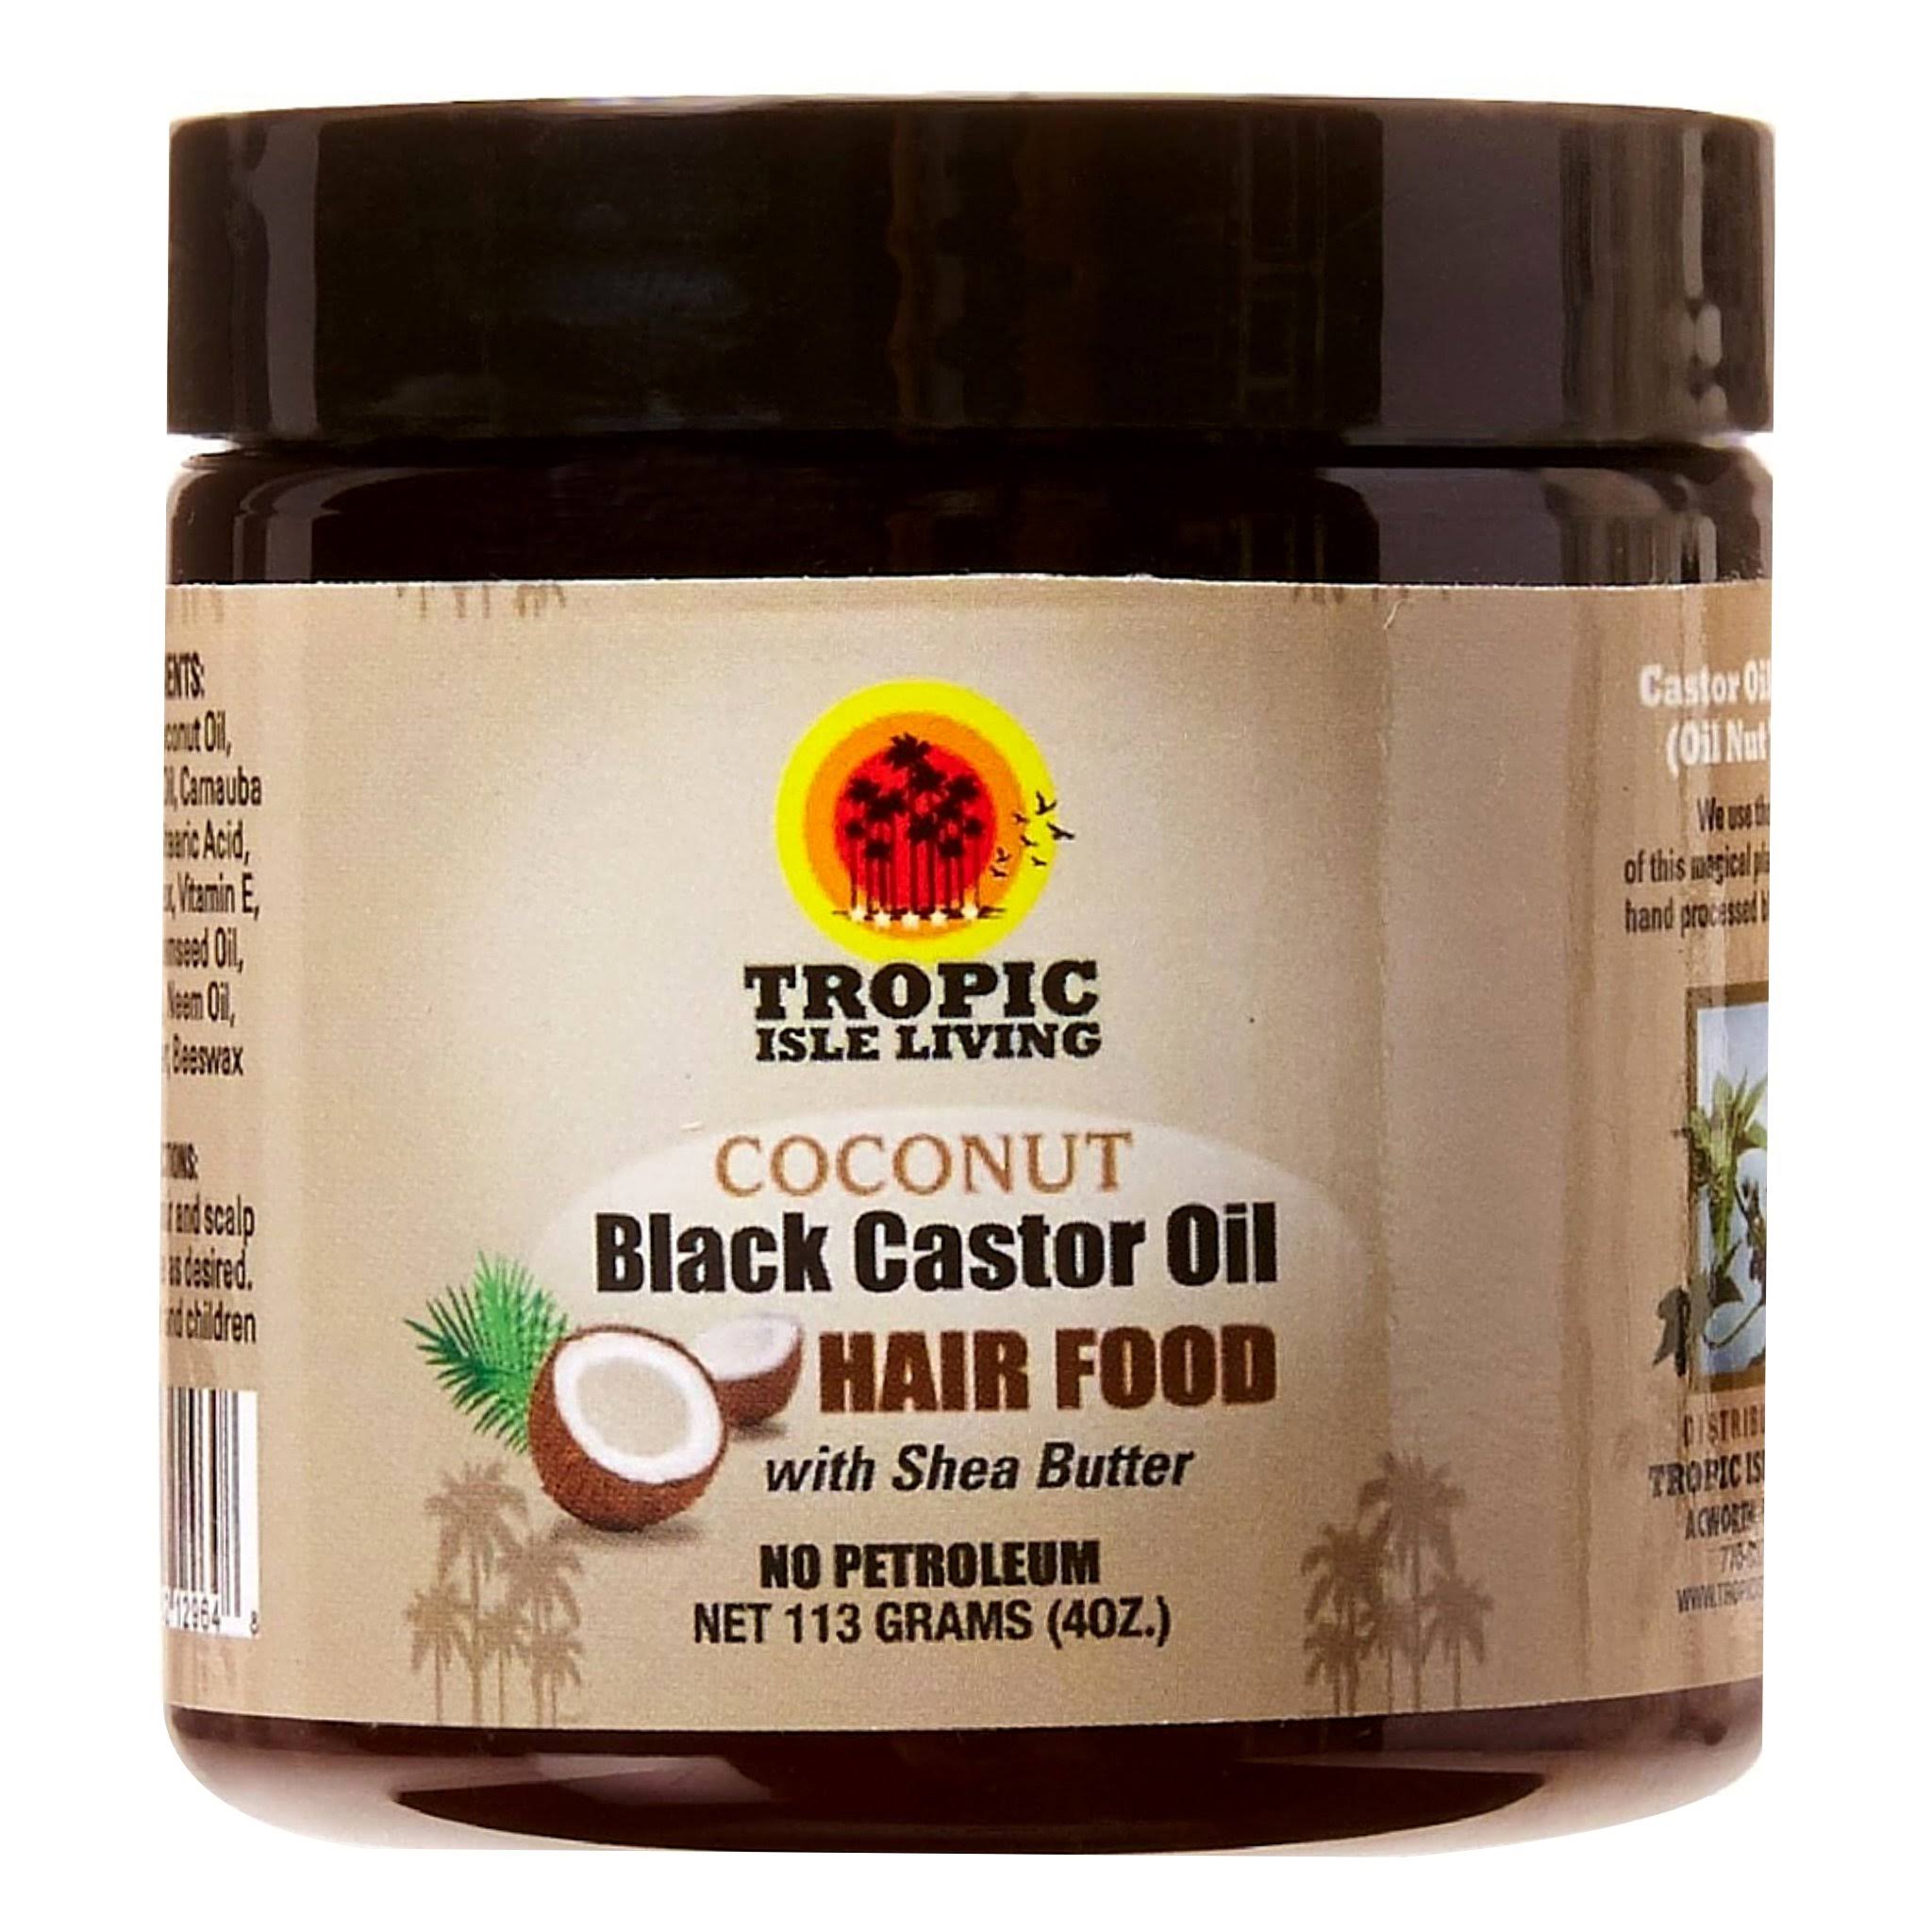 TROPIC ISLE LIVING JAMAICAN Black CASTOR OIL COCONUT Hair FOOD 4oz